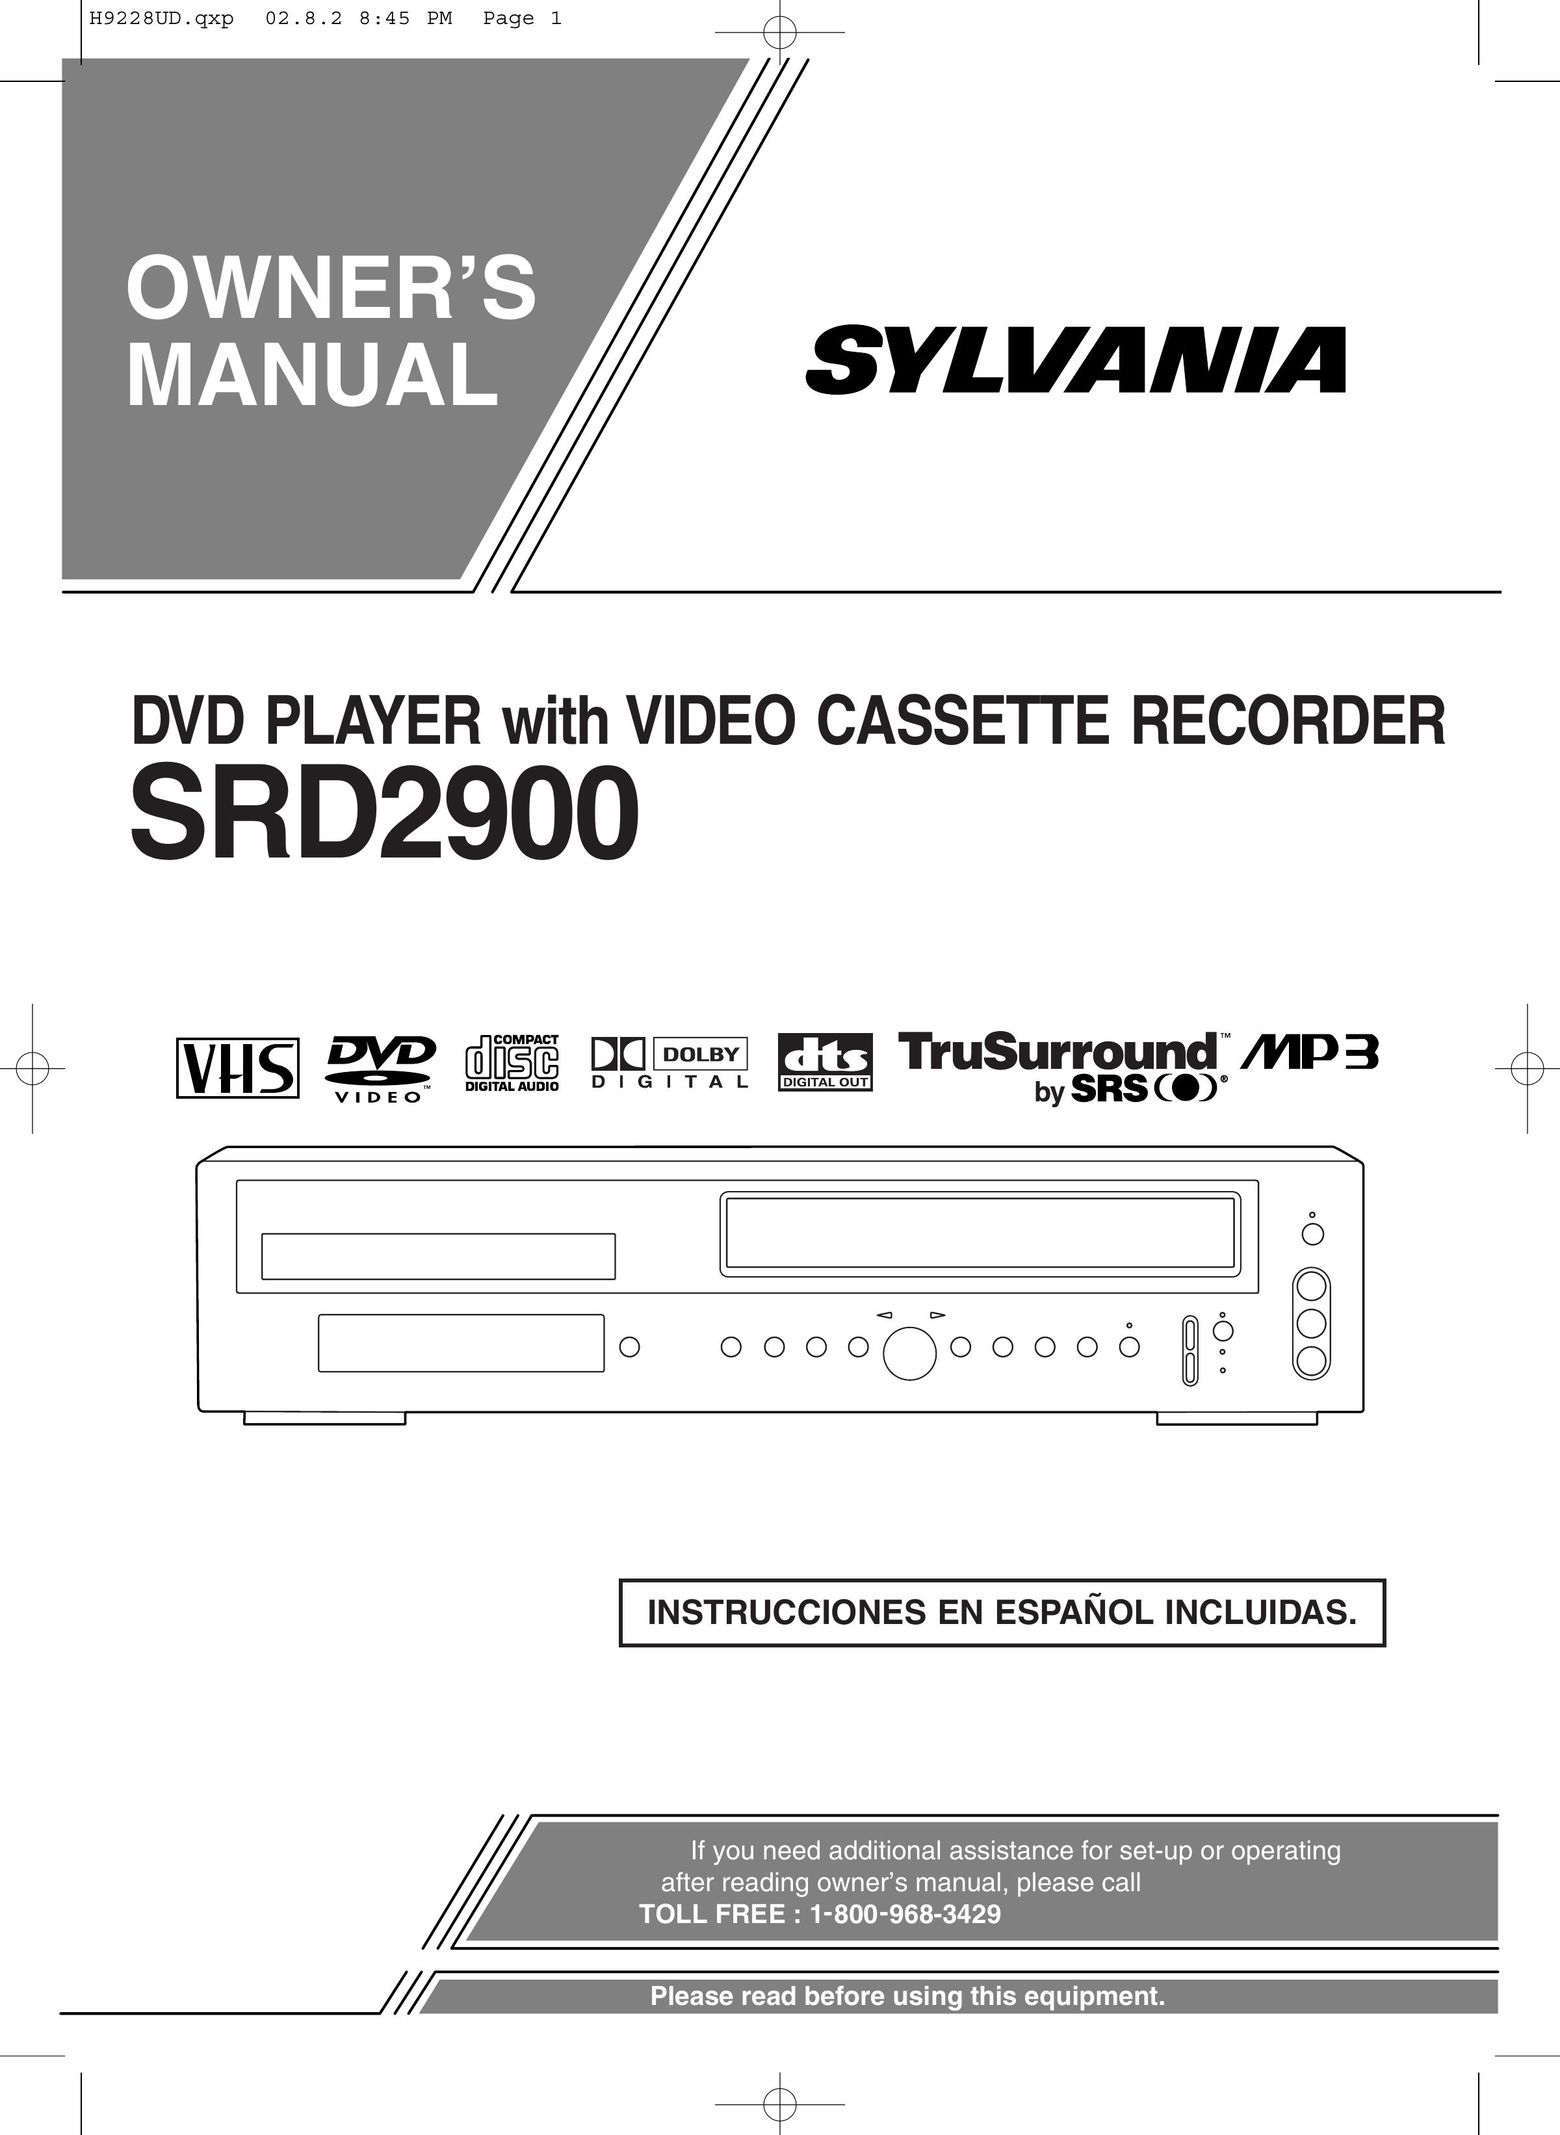 Sears SRD2900 DVD VCR Combo User Manual